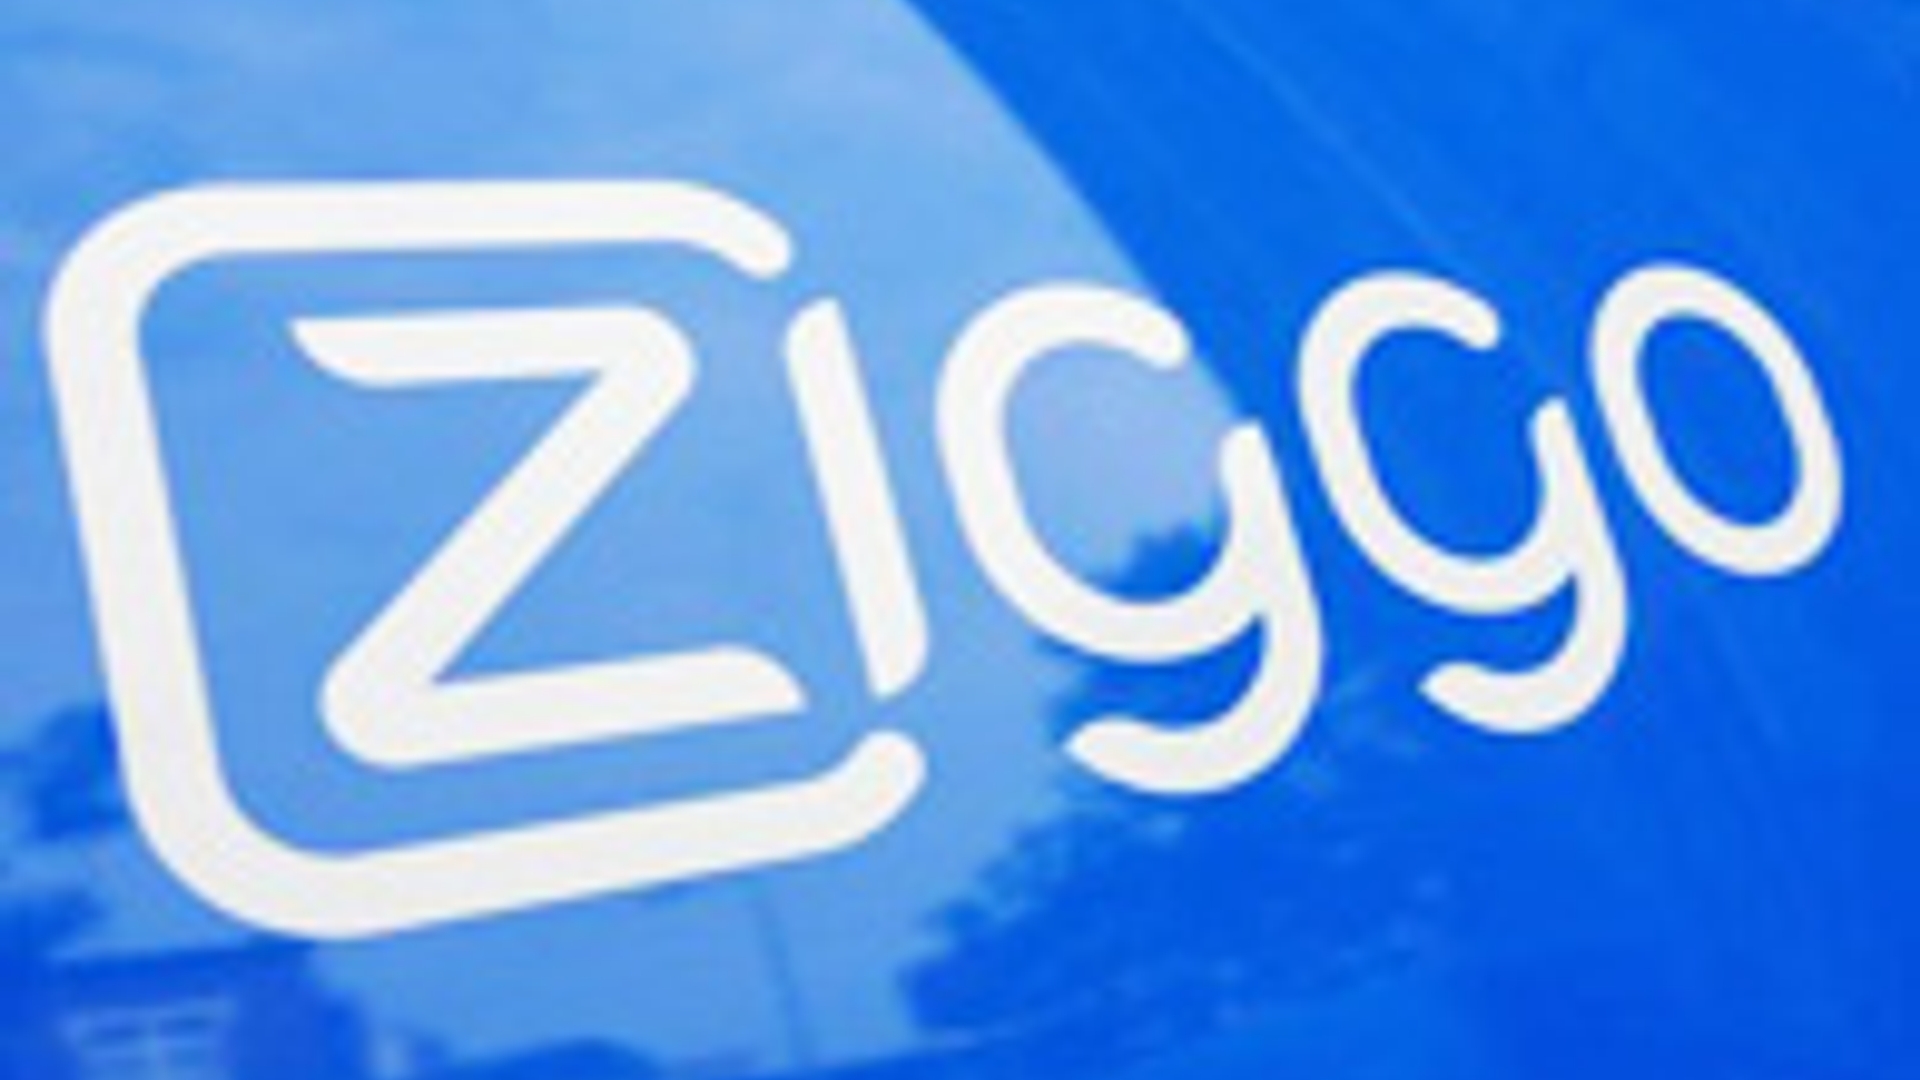 ziggo-logo_05.jpg